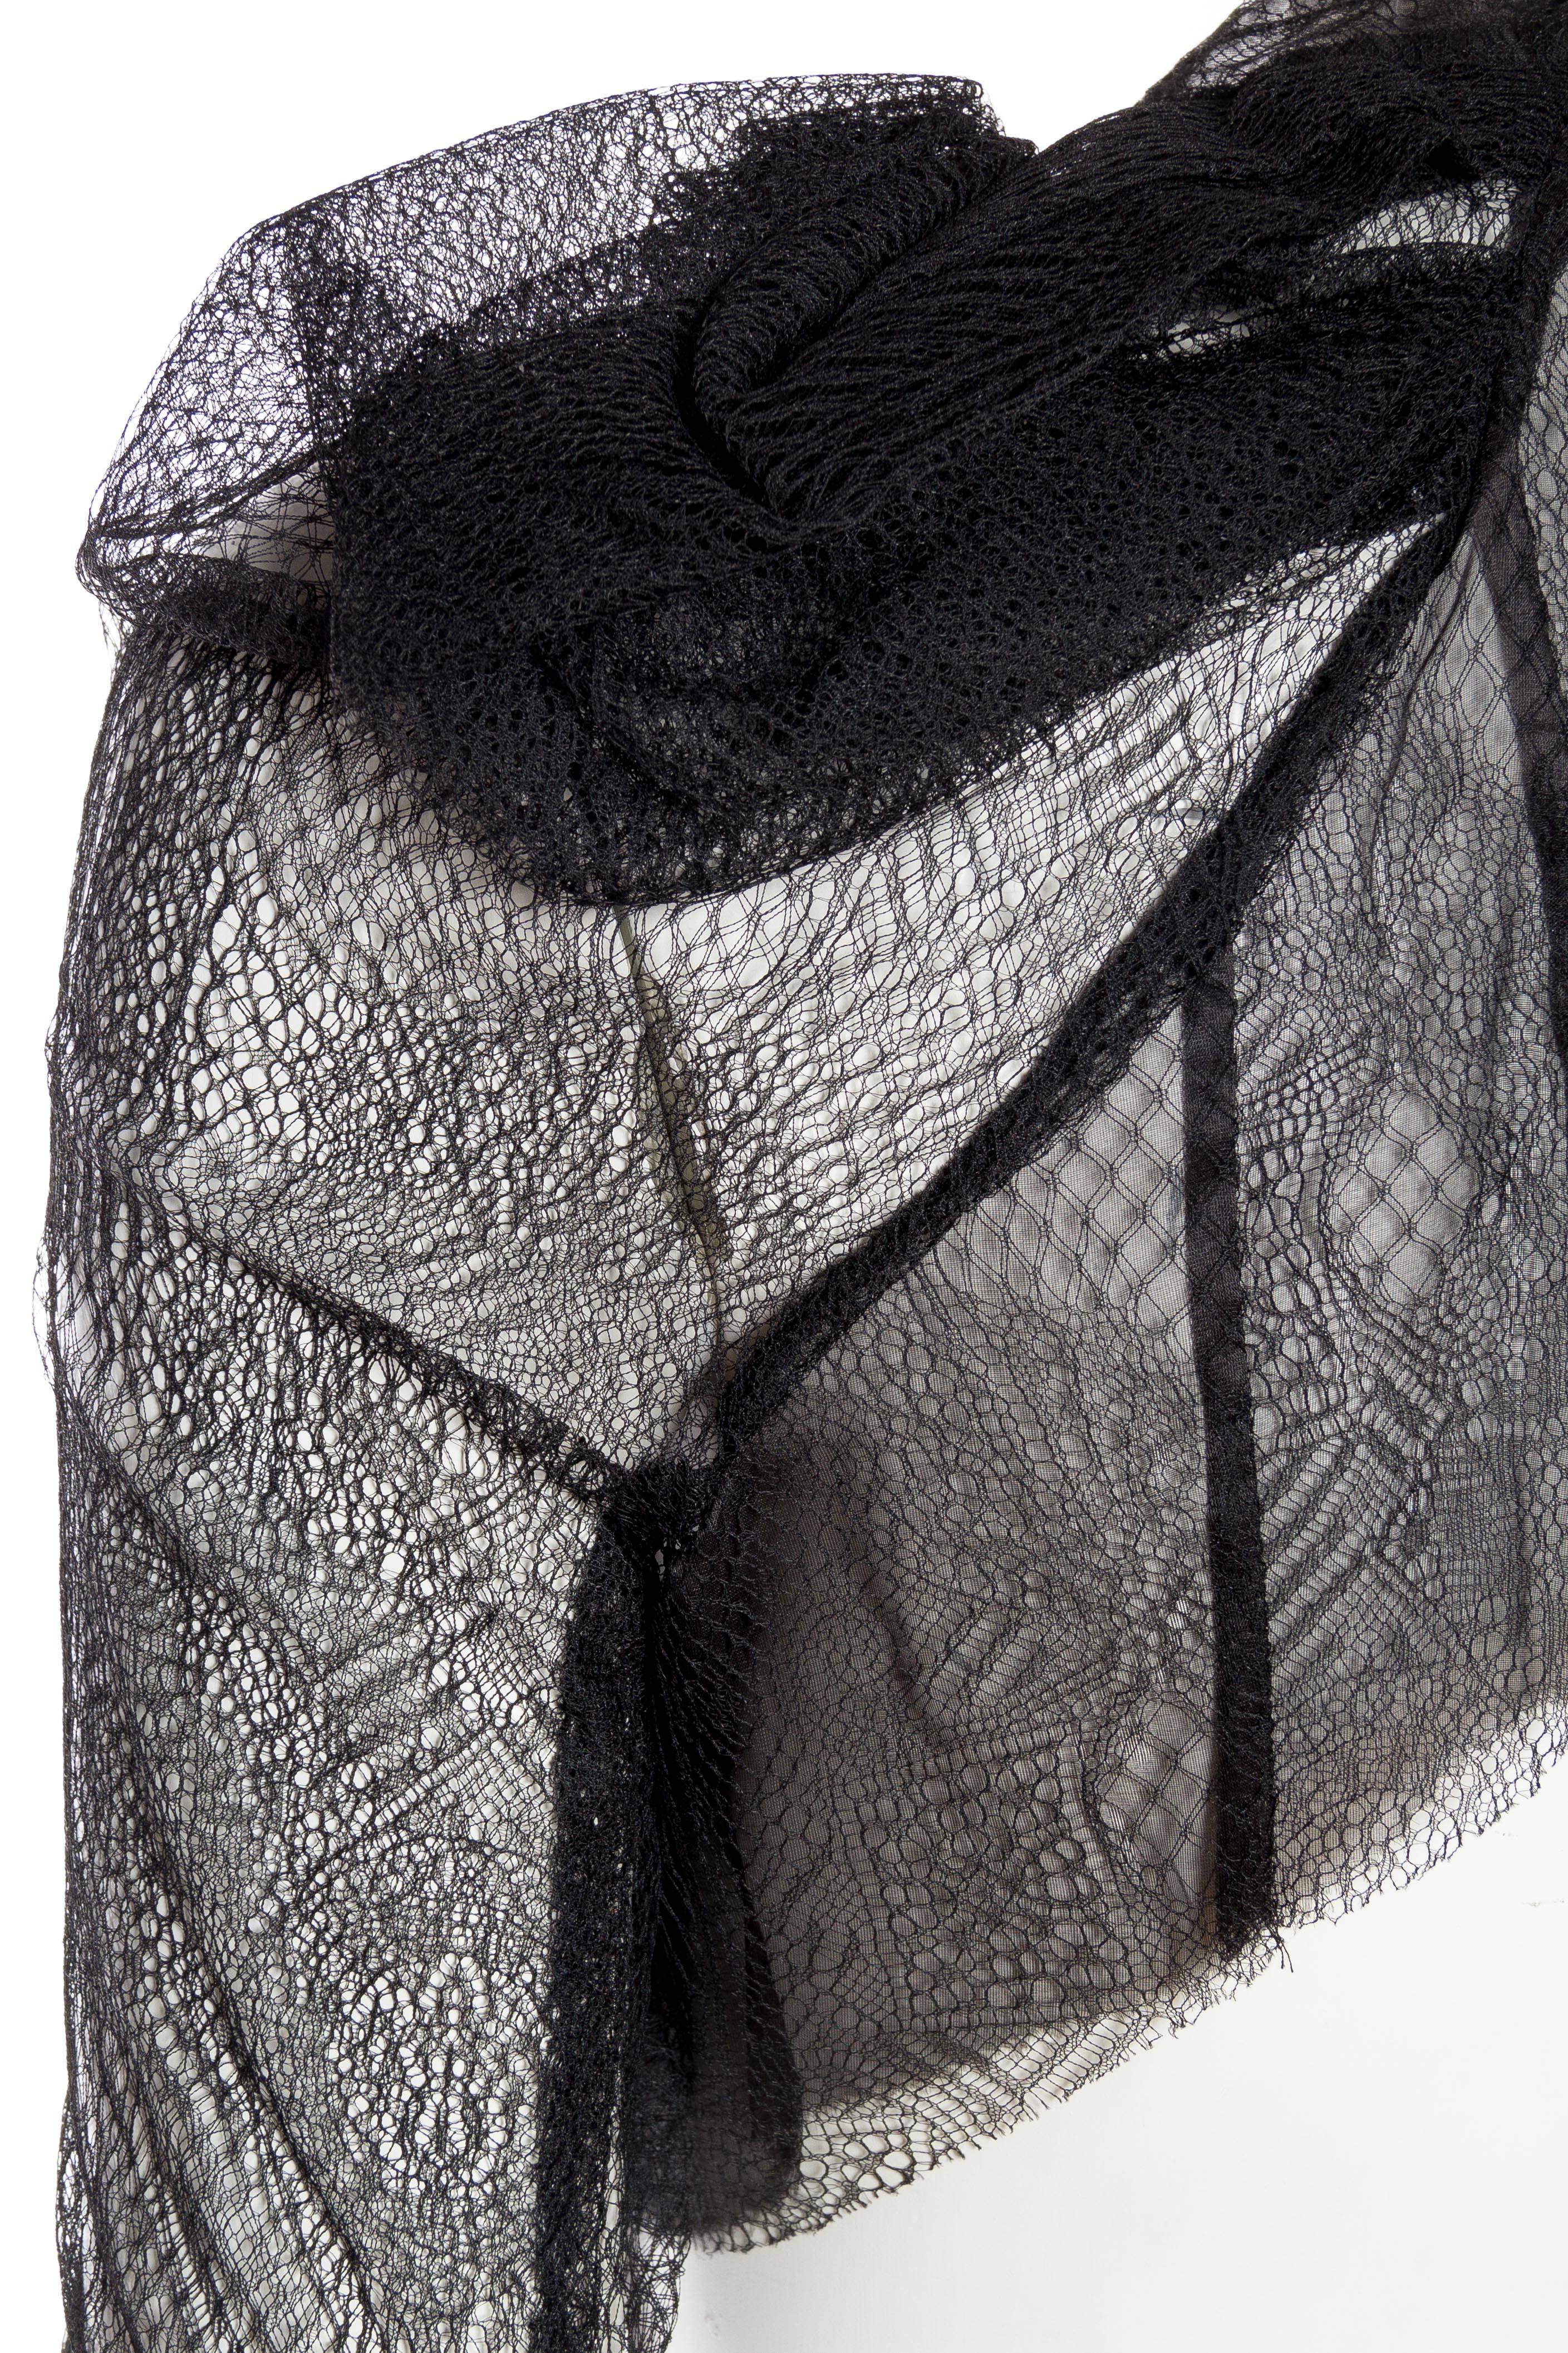 Silk and Lace Deconstructed Bolero Shrug by Sharon Wauchob 2